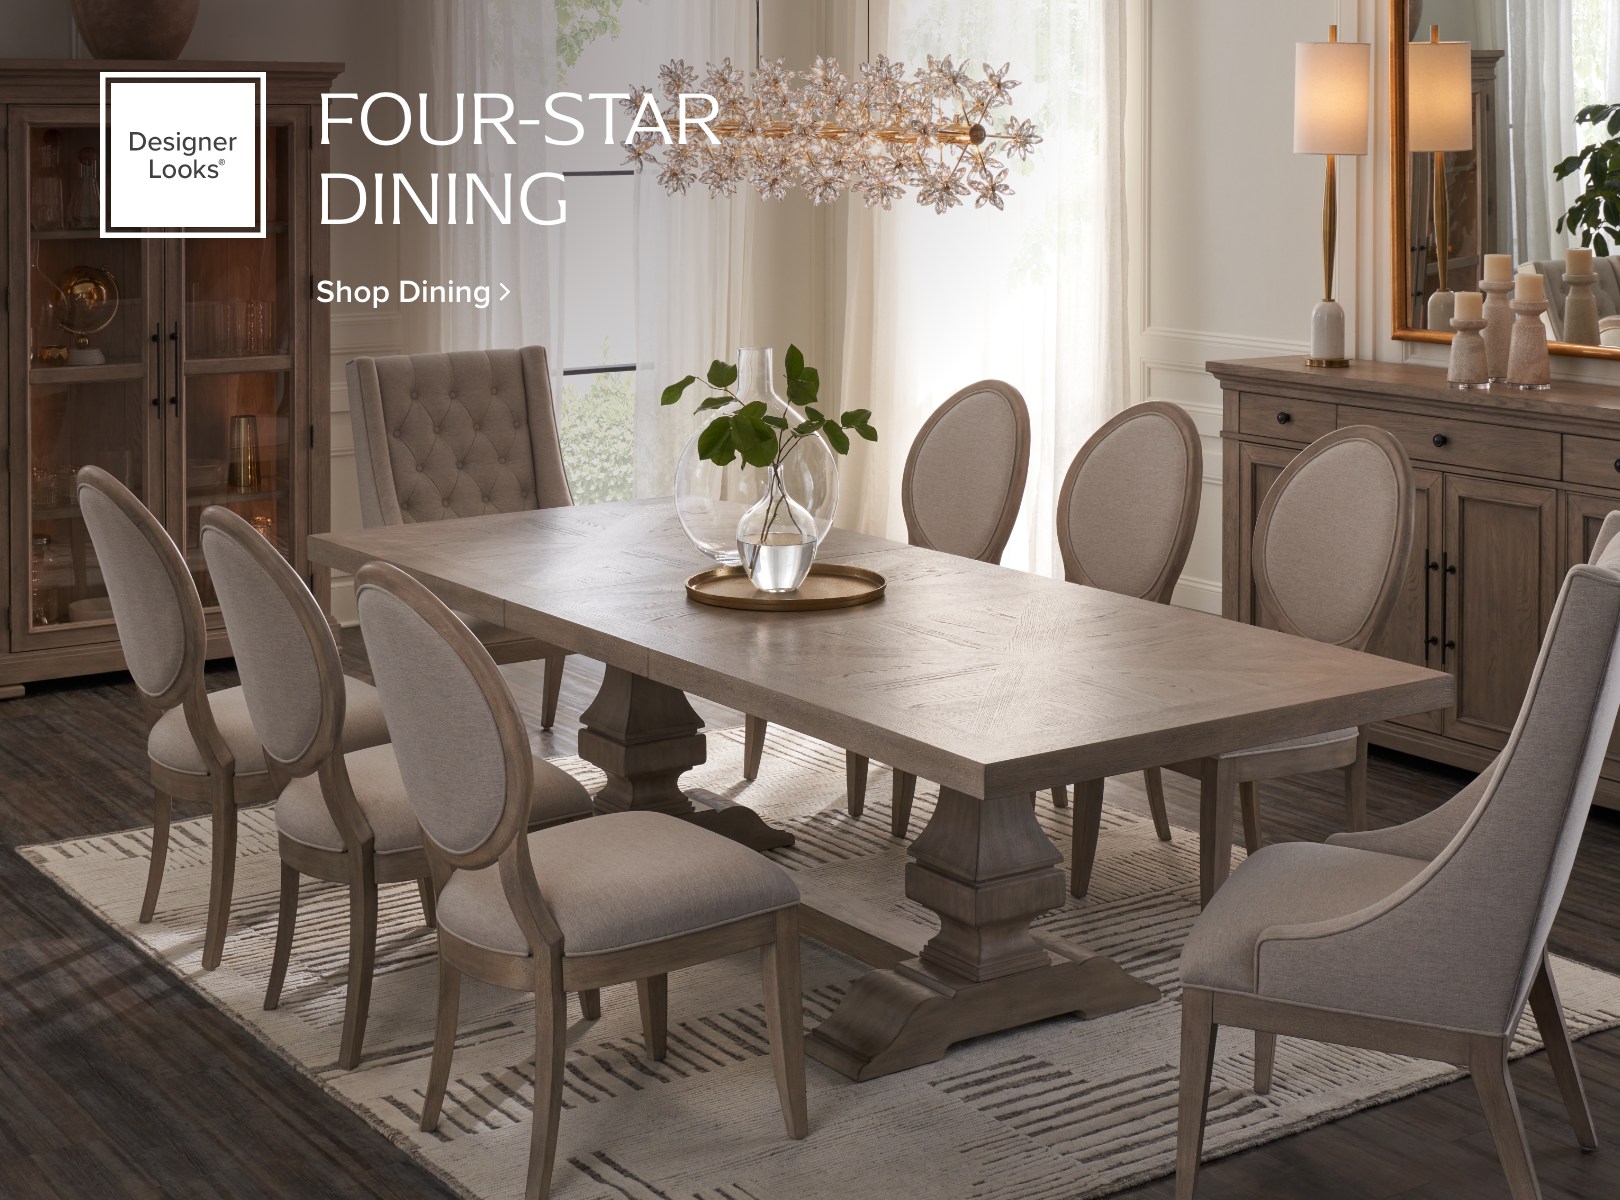 Four-star Dining